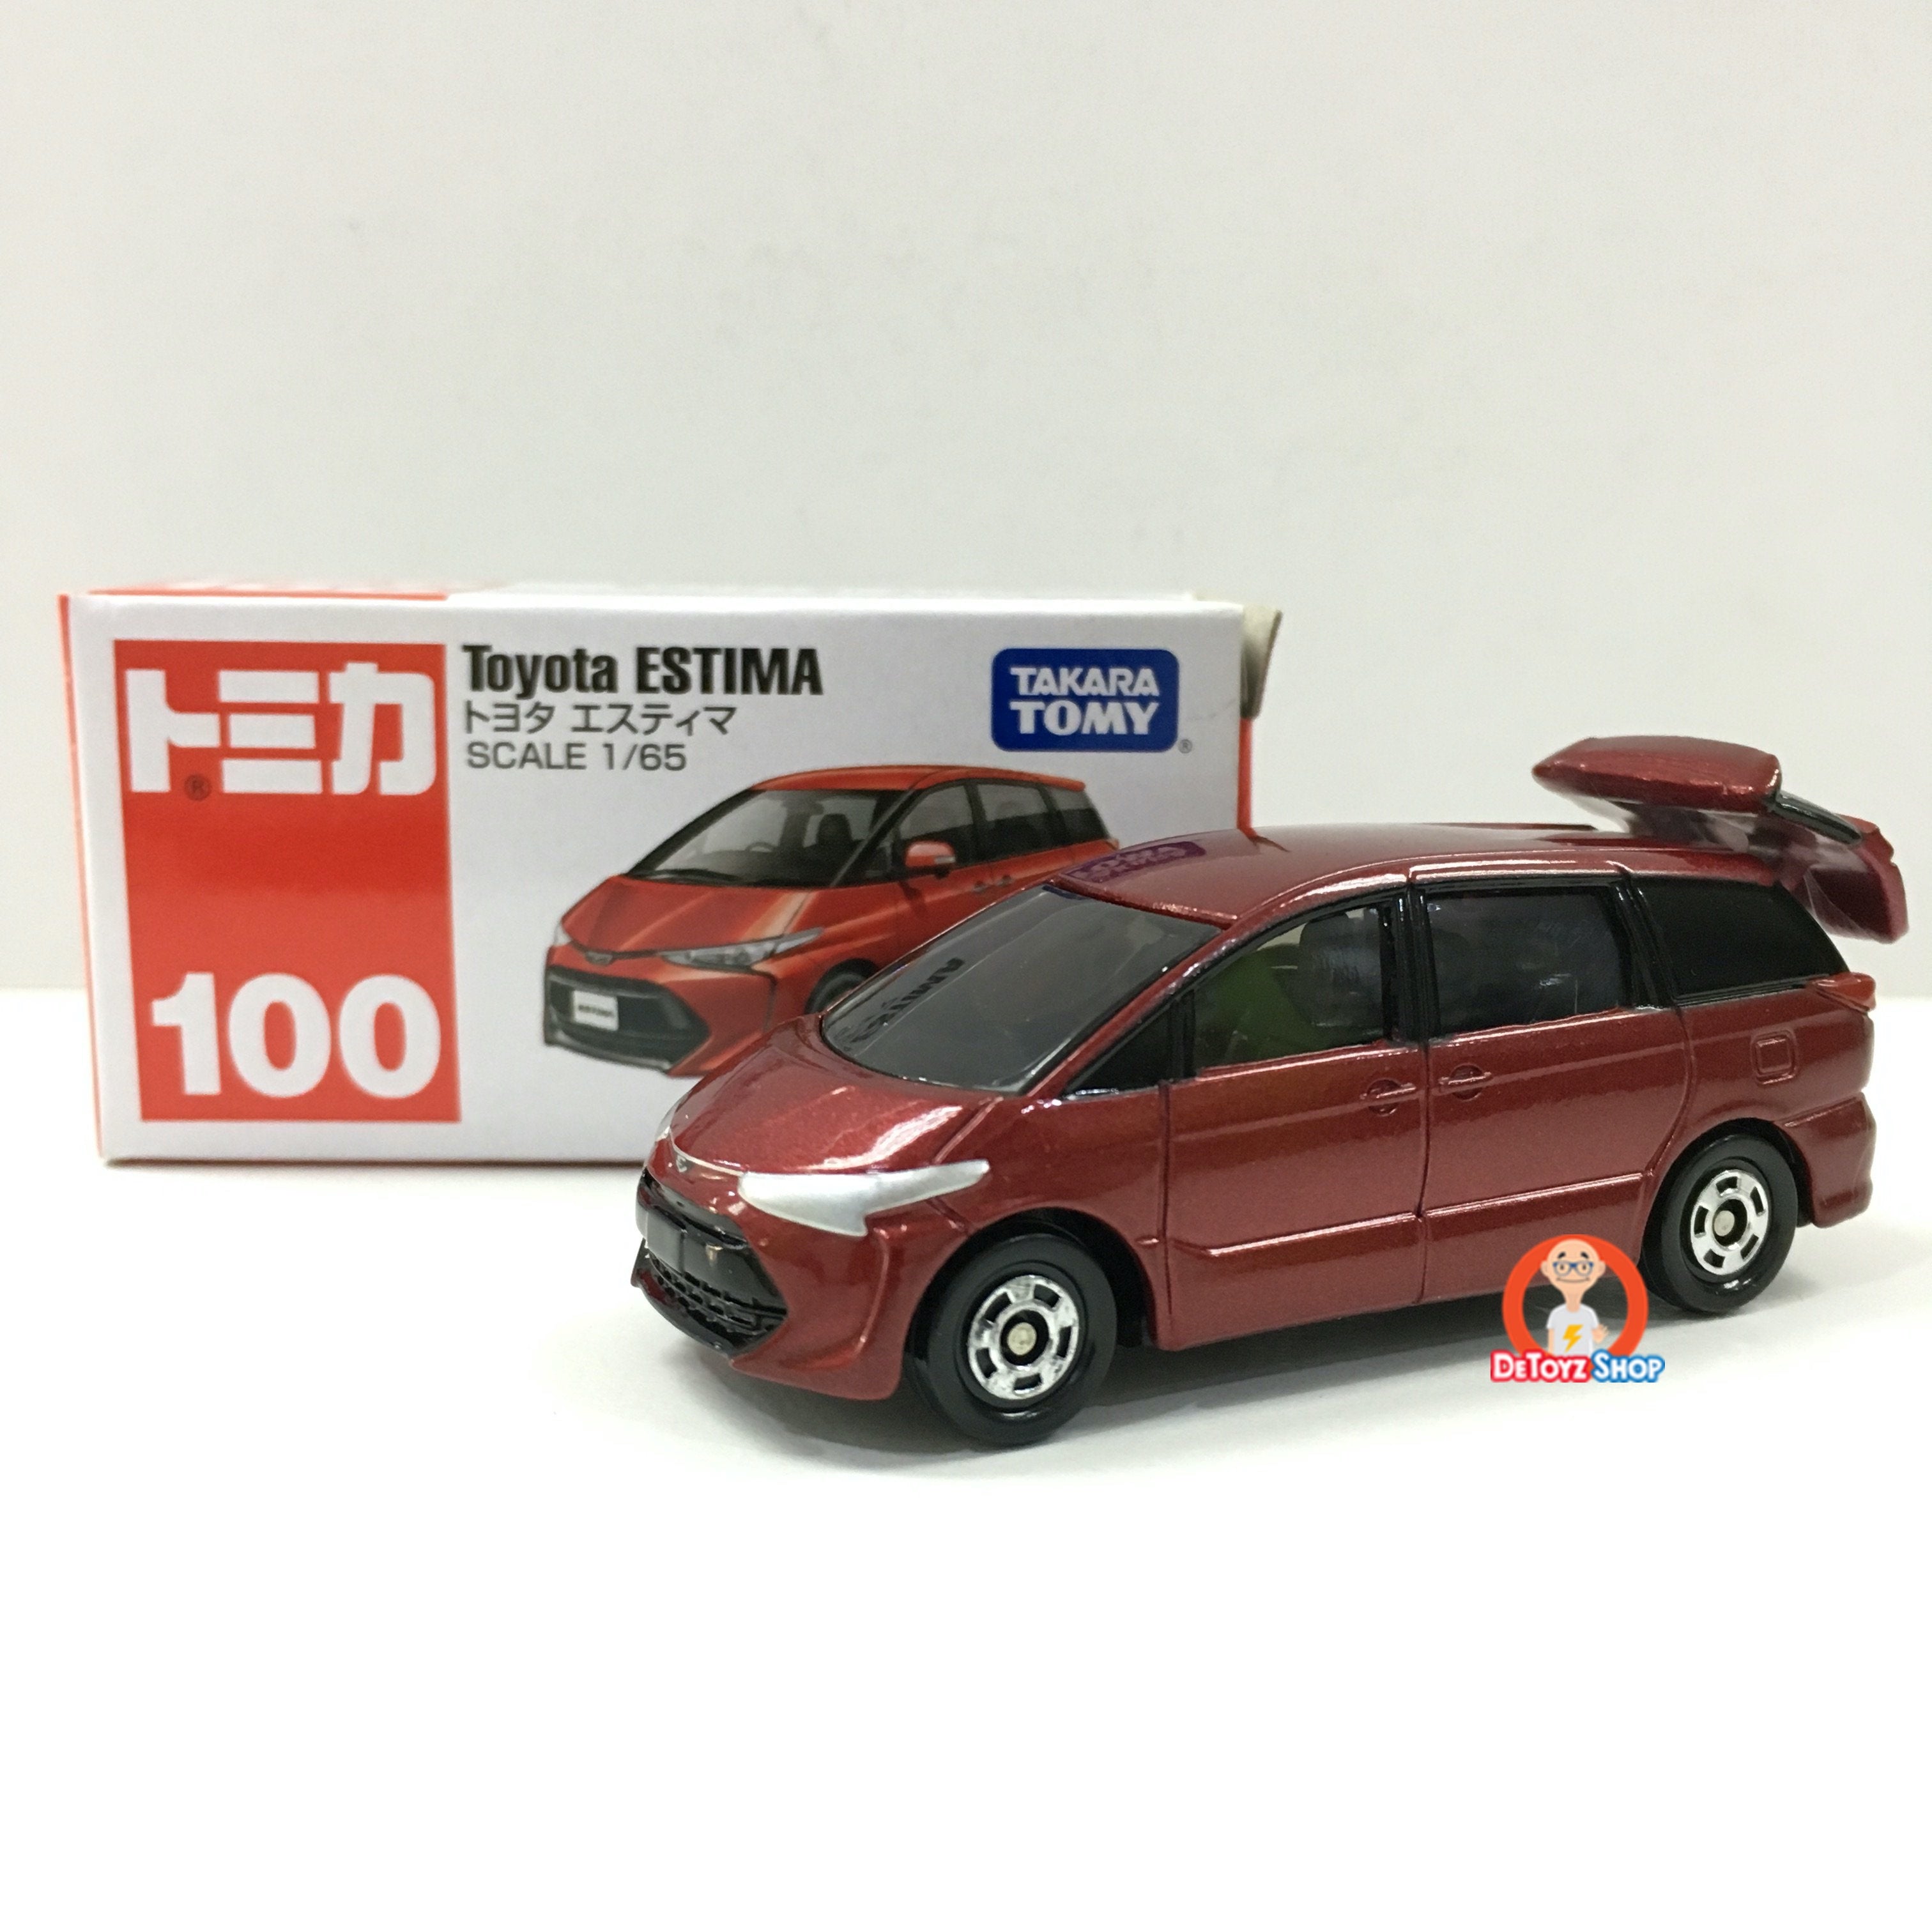 Tomica #100 Toyota Estima